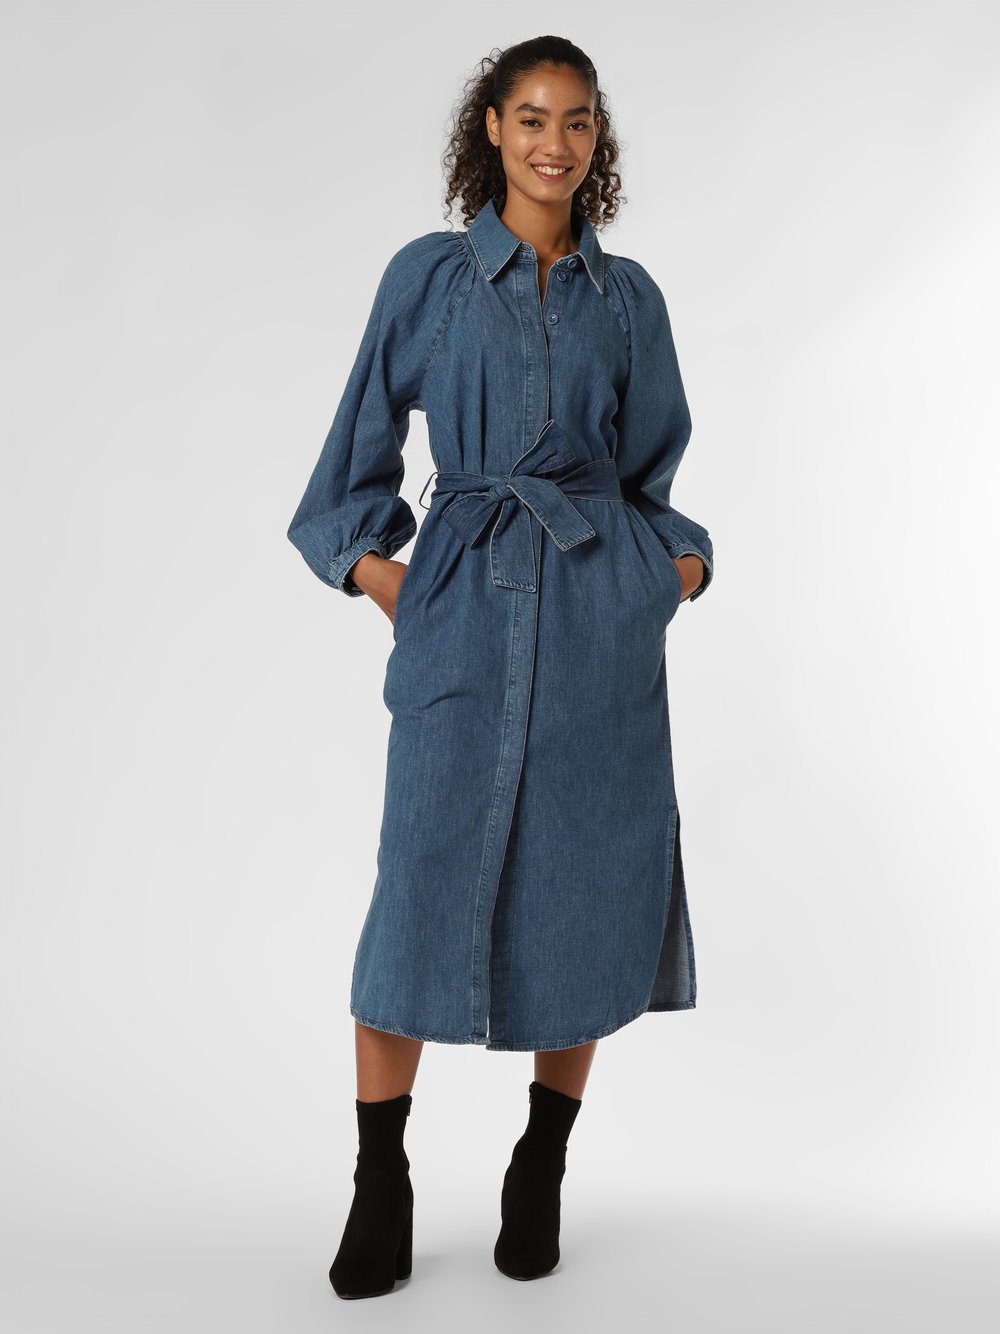 Esprit Collection - Damska sukienka jeansowa, niebieski